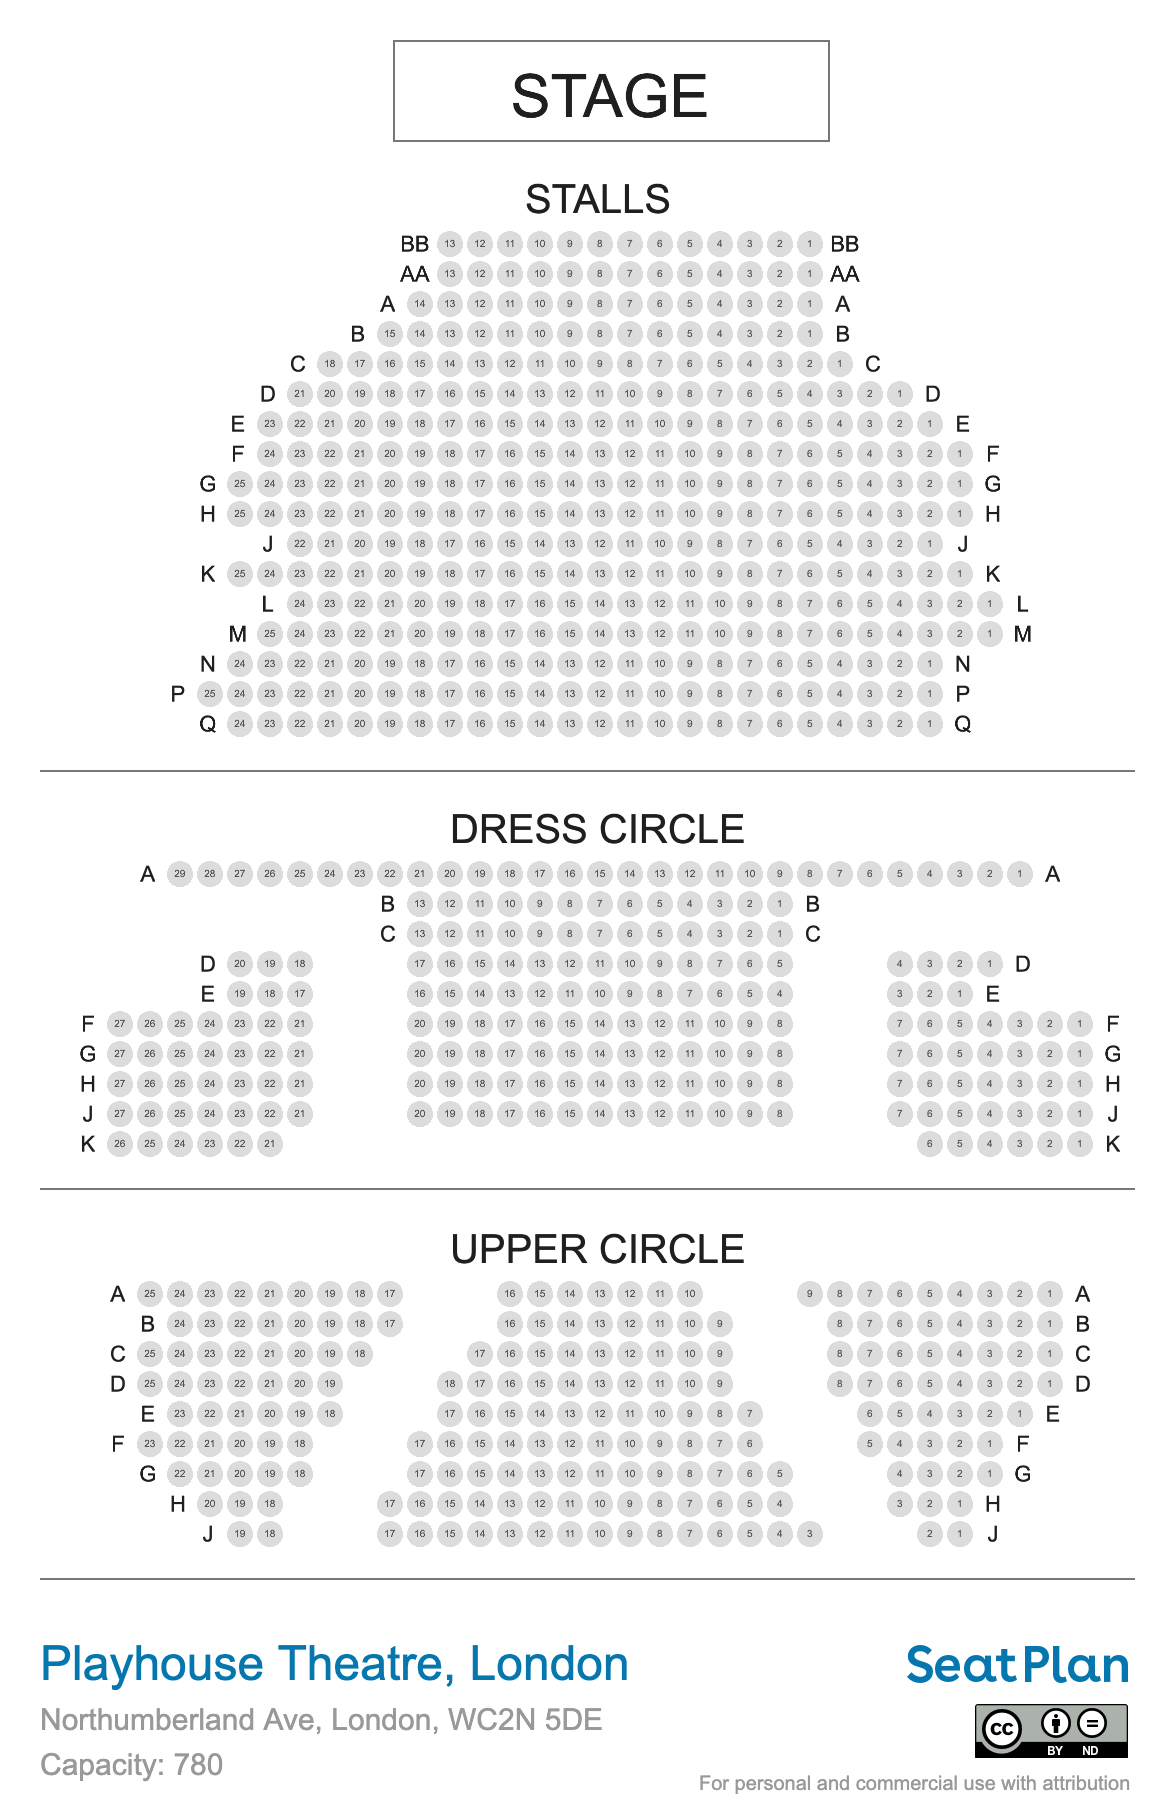 Playhouse Theatre seating plan